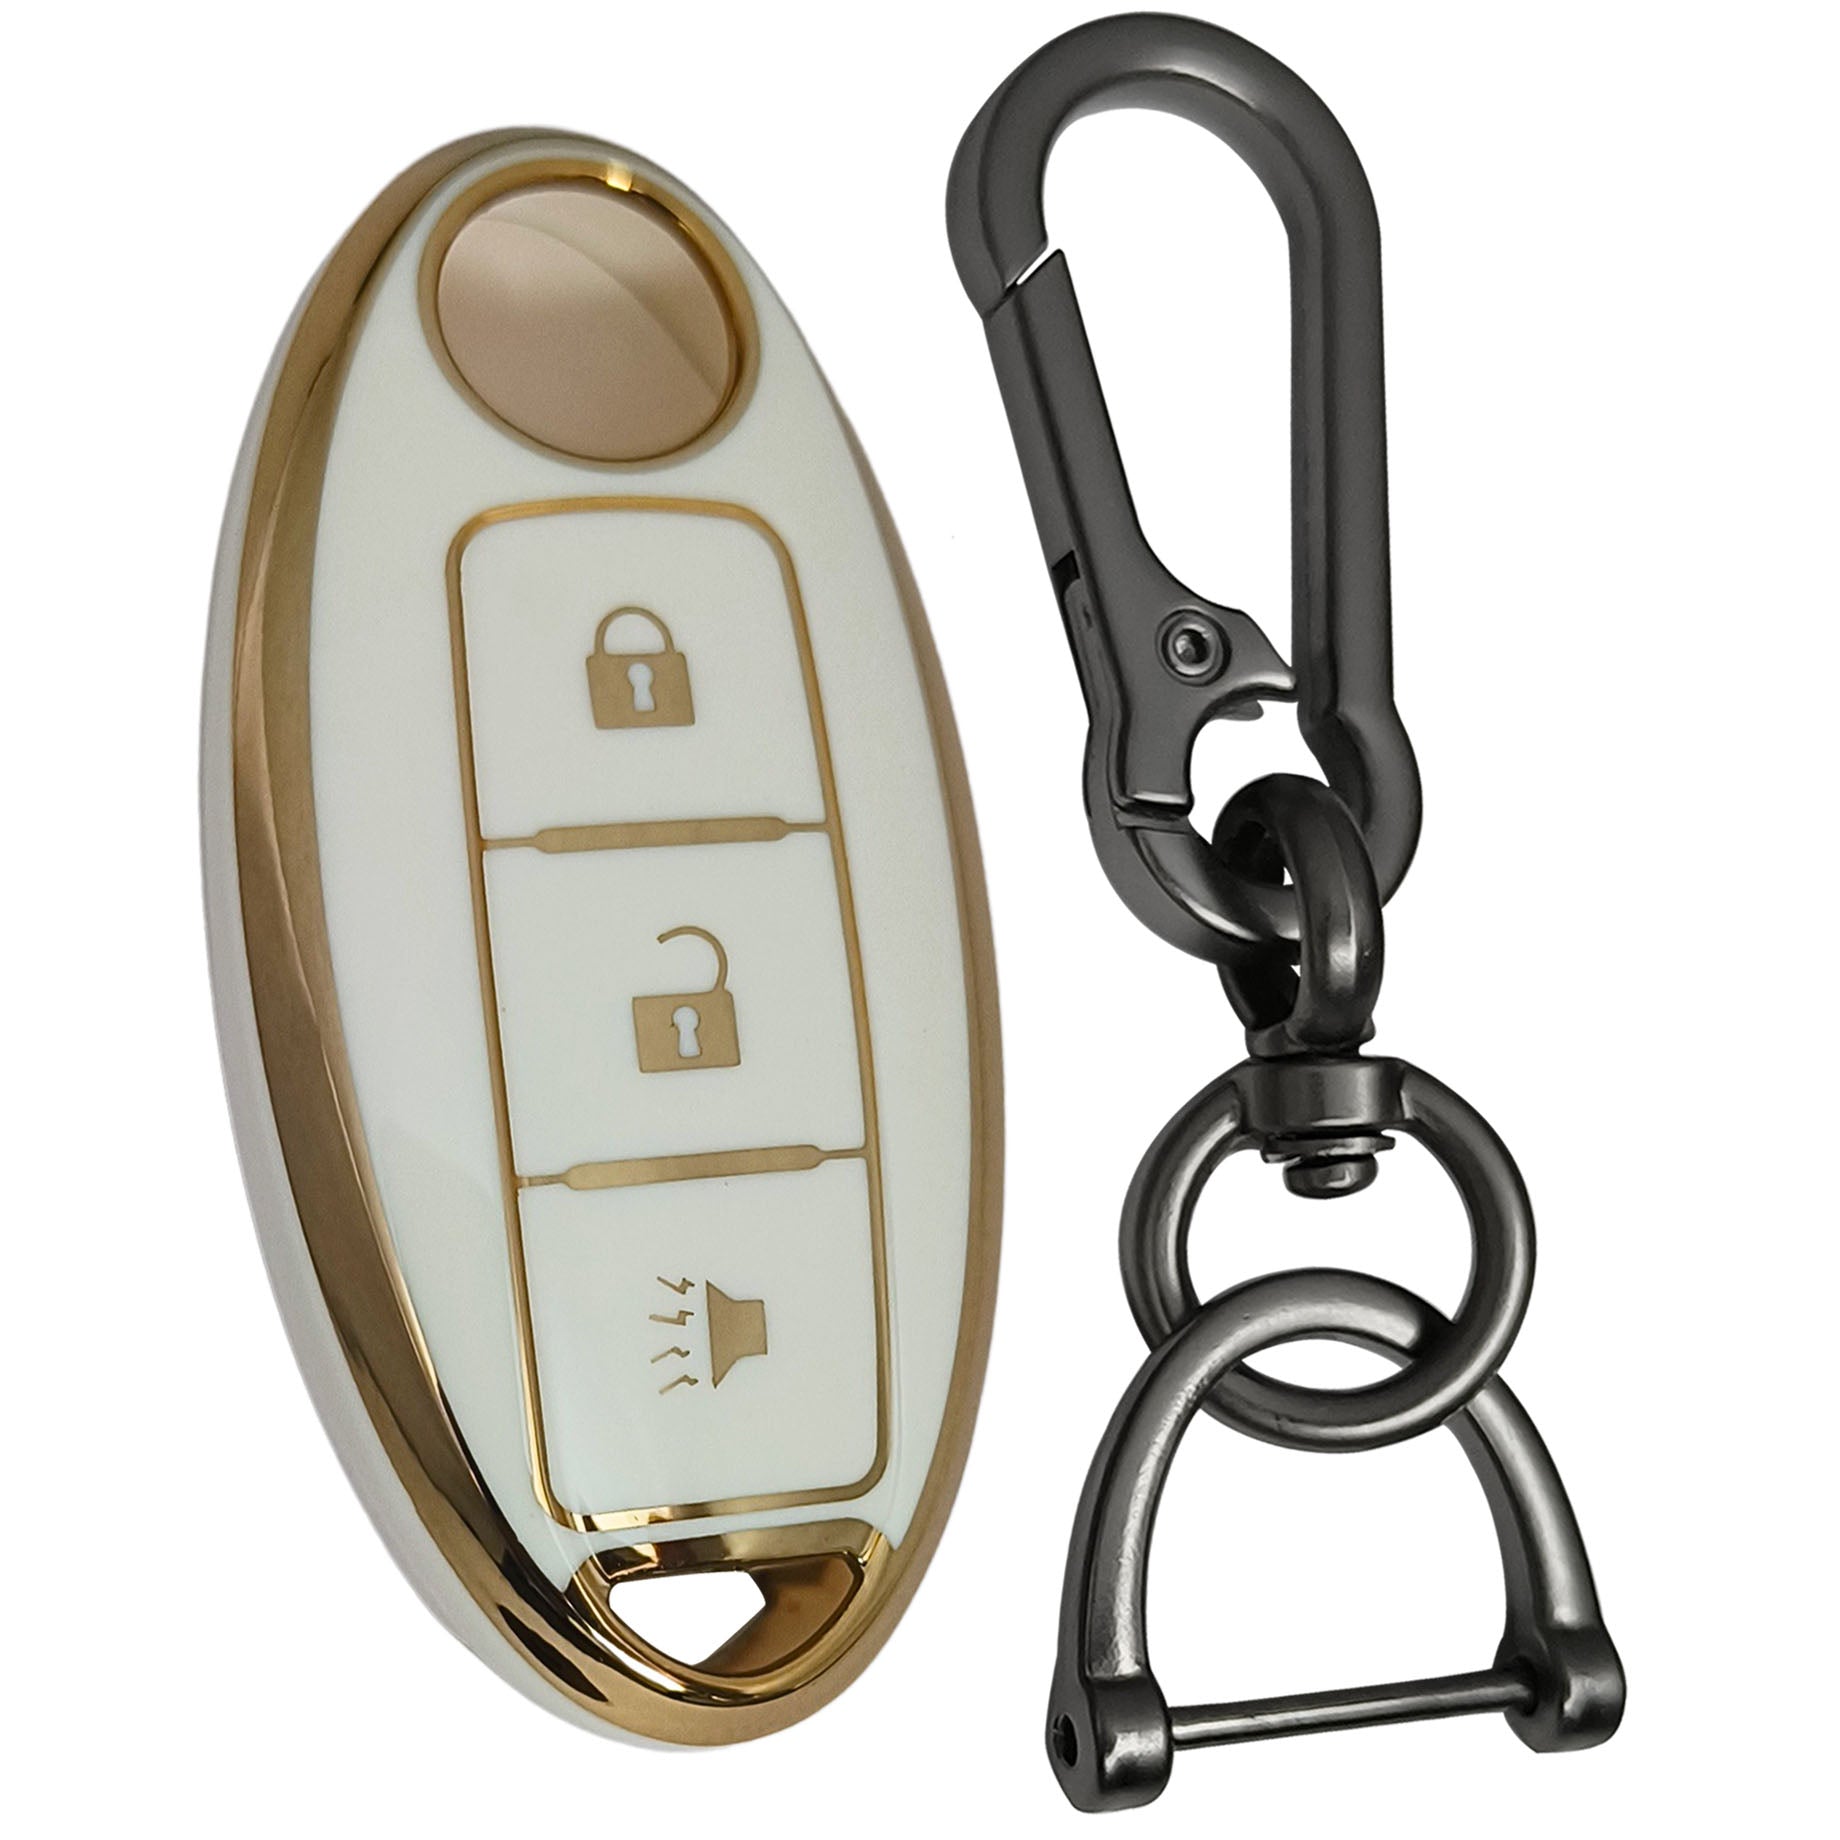 nissan micra sunny teana magnite 3 button smart key keychain white gold